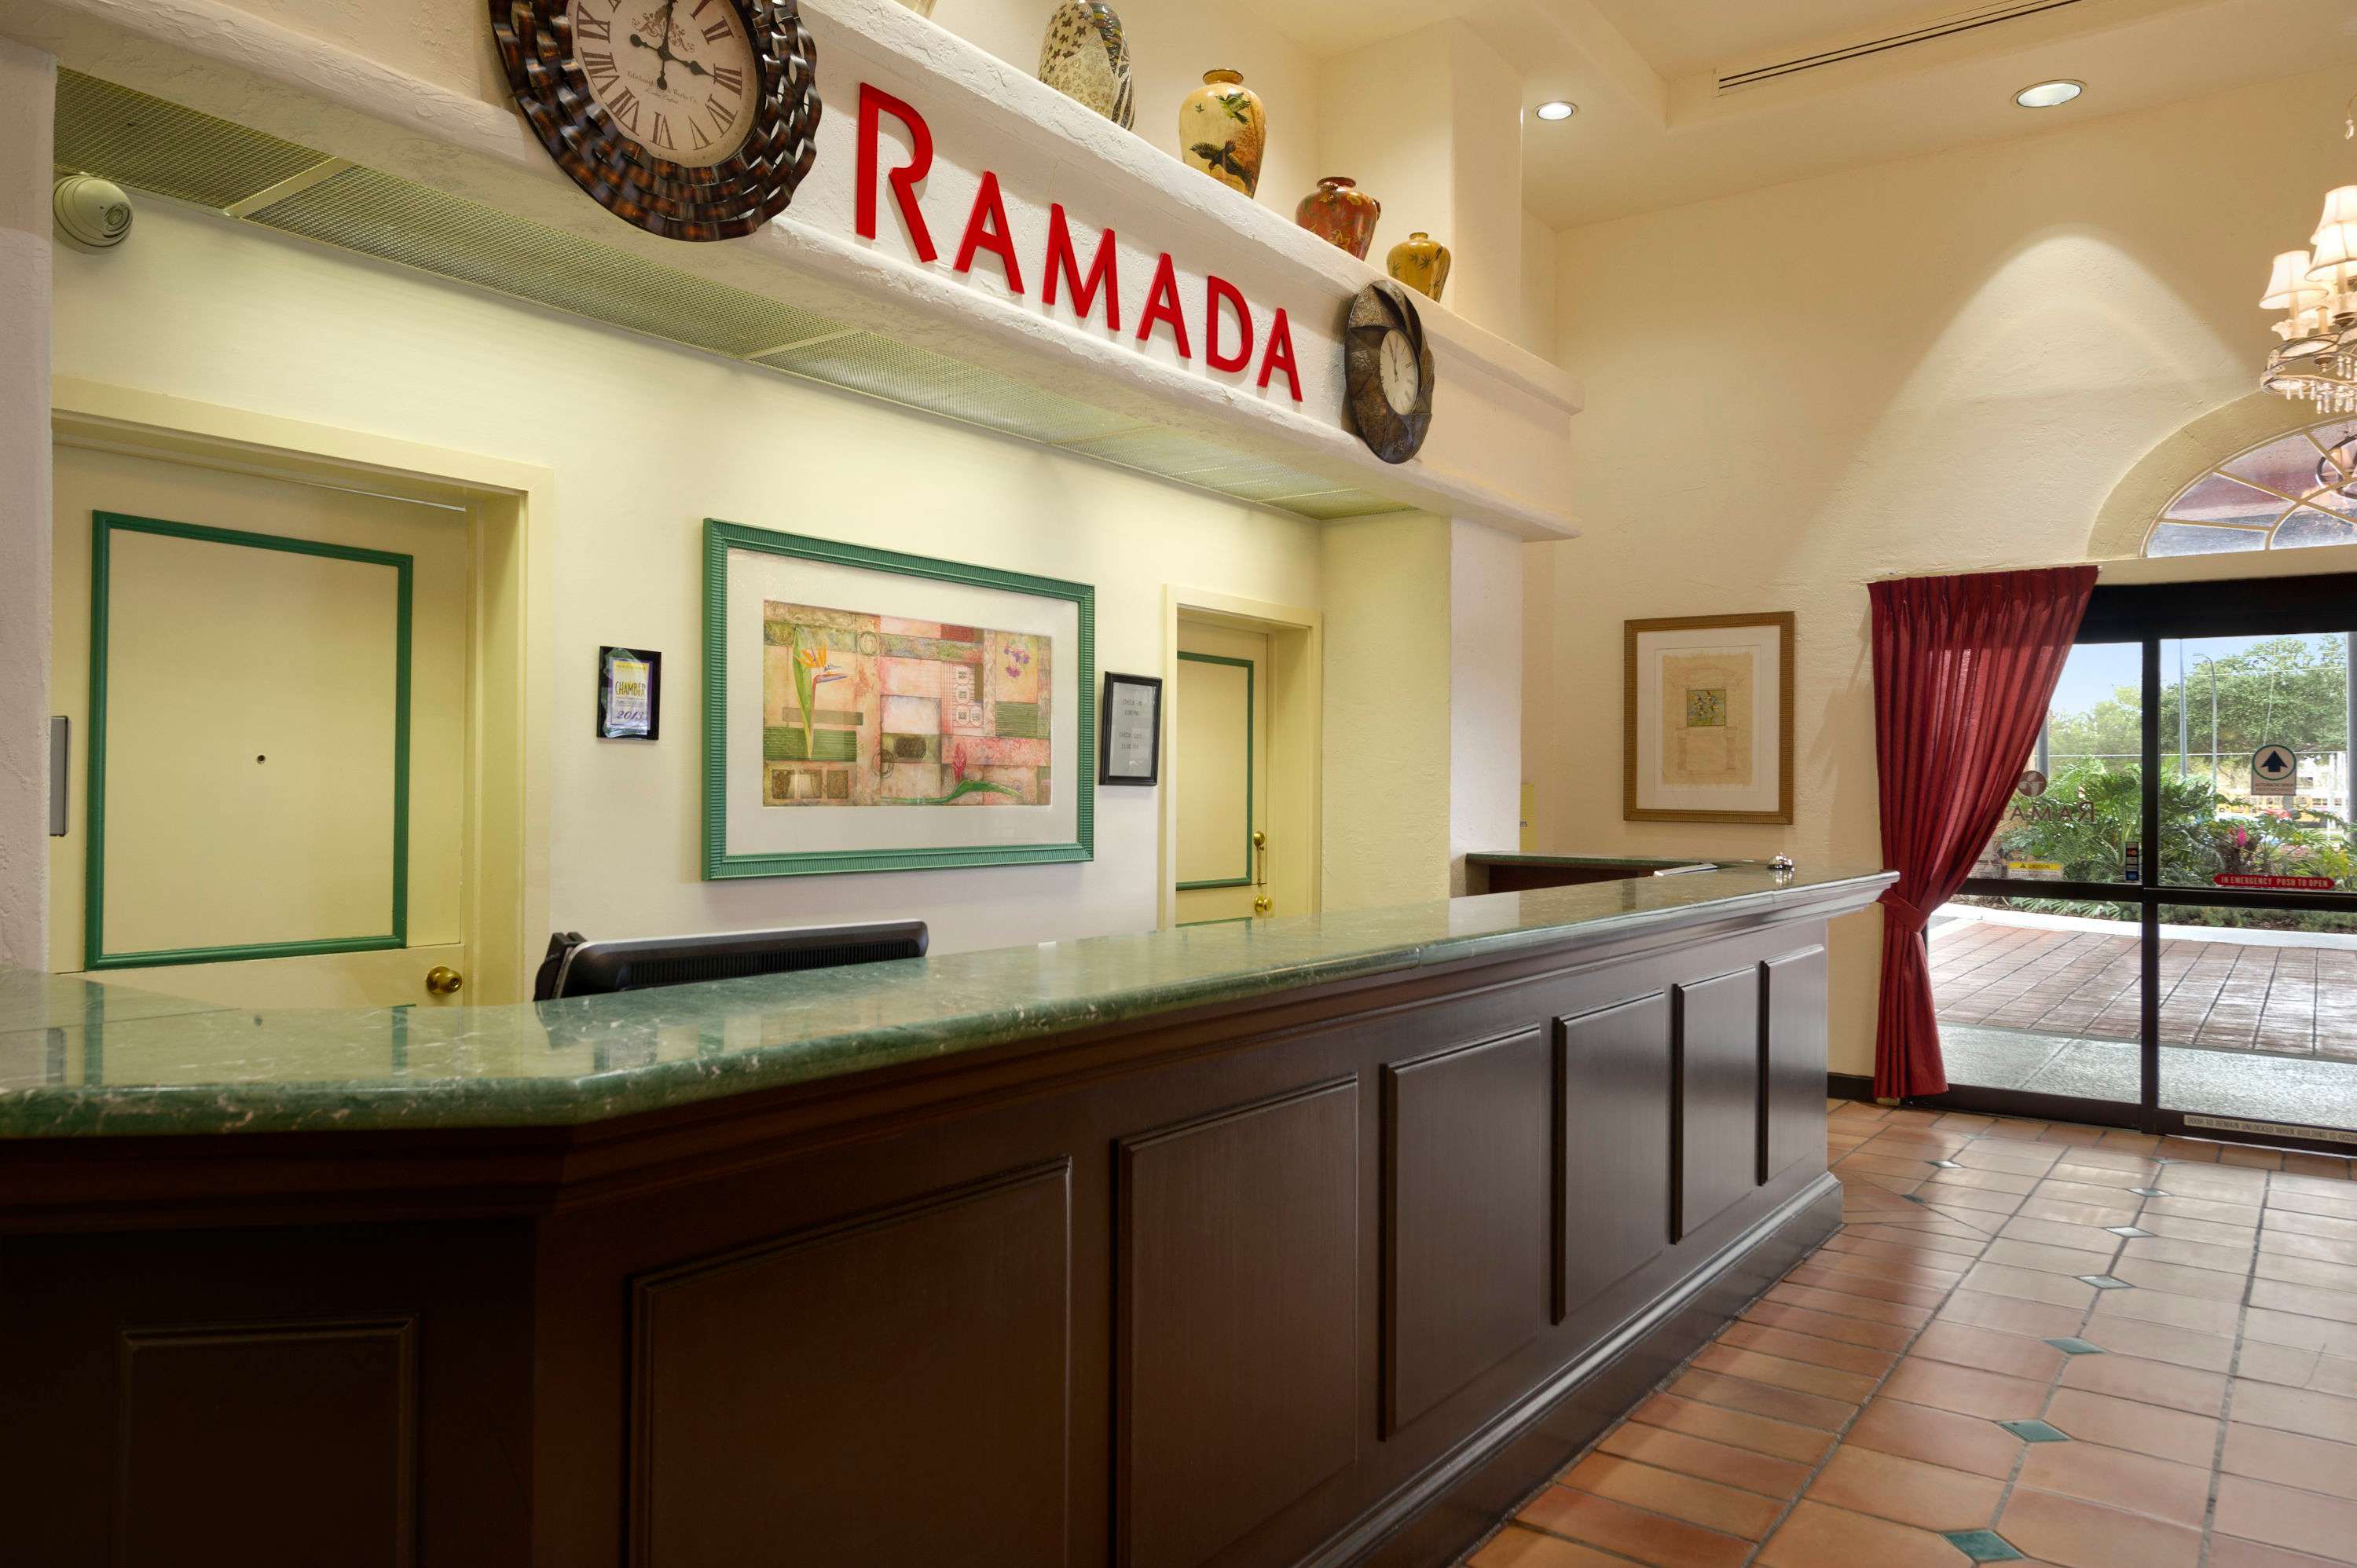 Ramada Kissimee Downtown Hotel